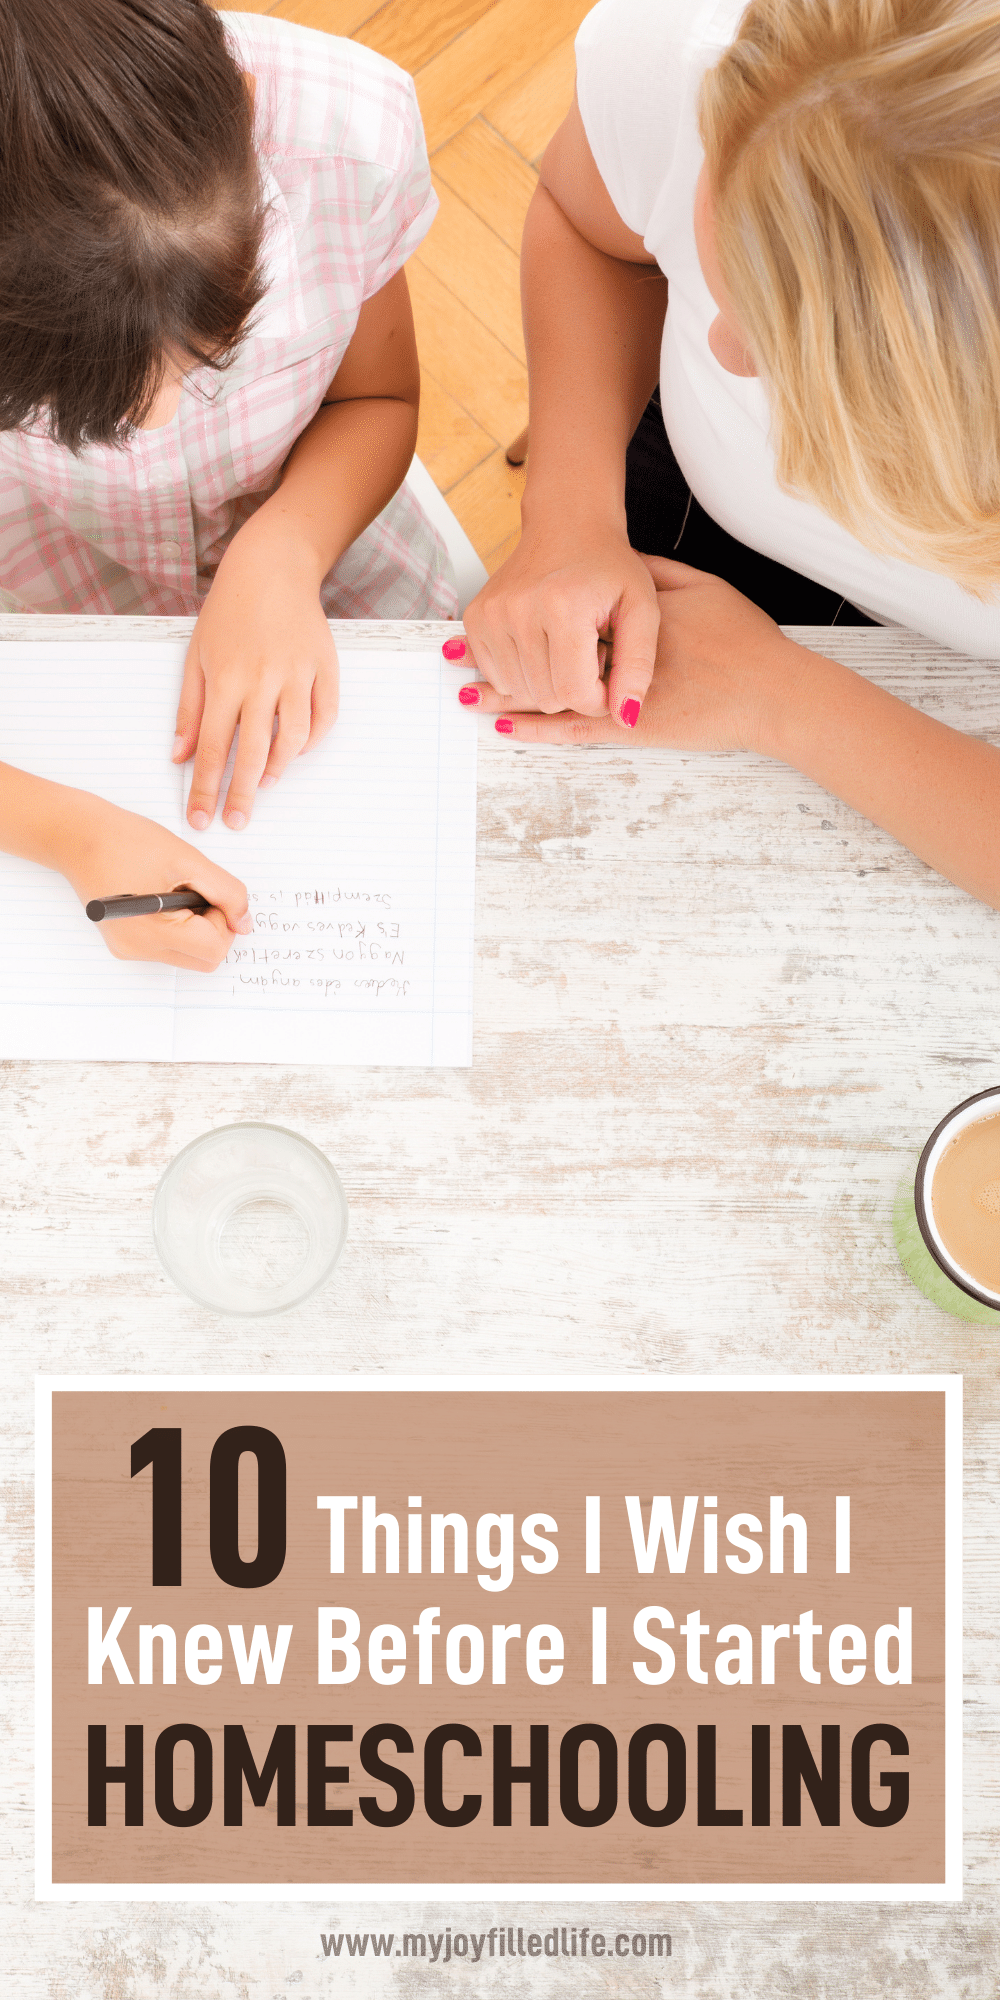 10 Things I Wish I Knew Before Homeschooling